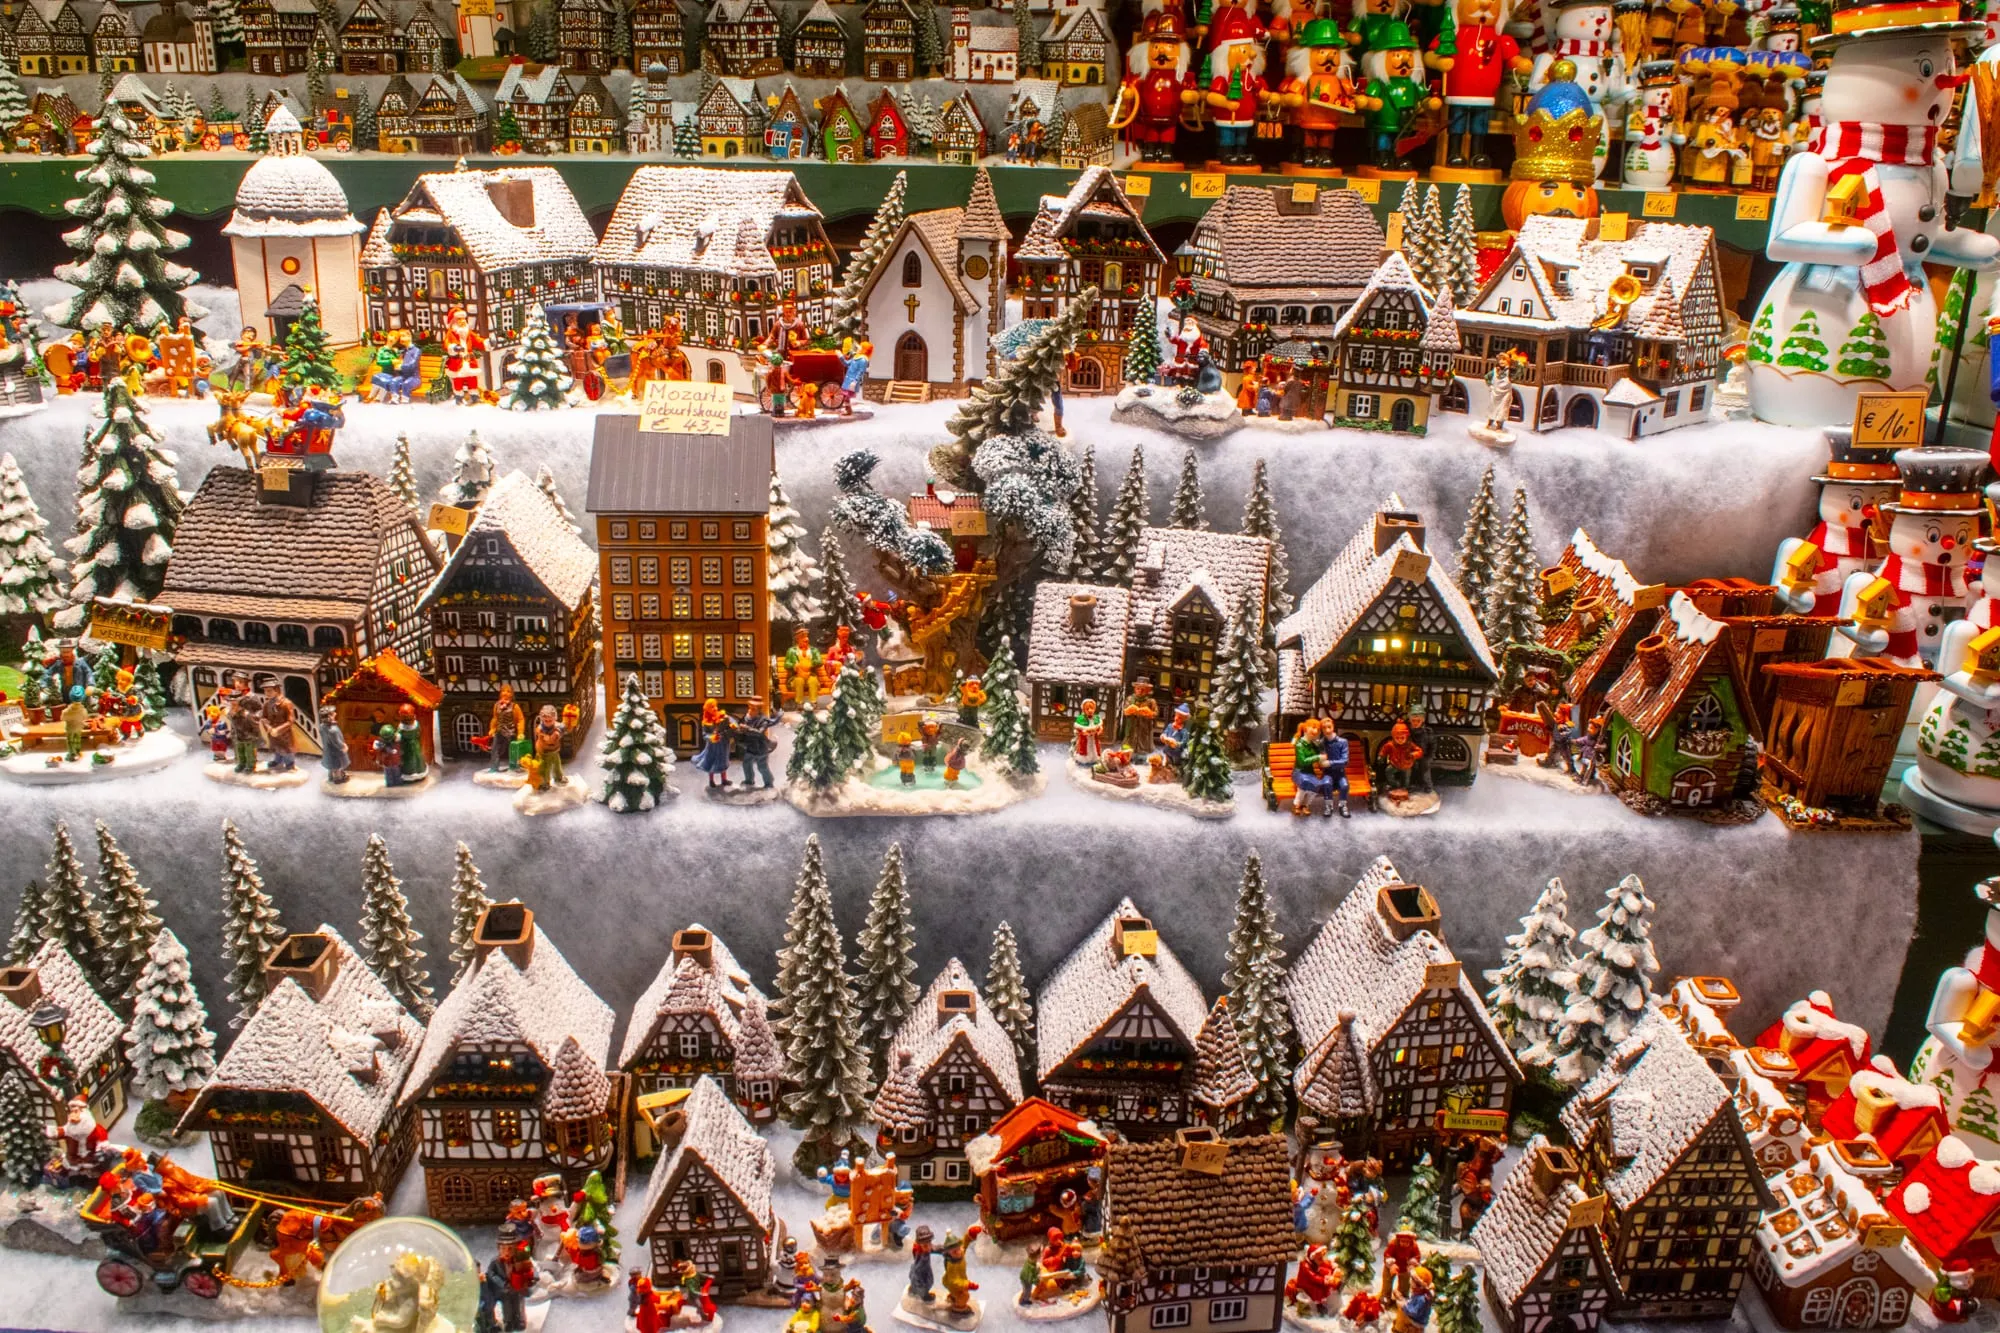 Austria Christmas Market Trip: Carved Buildings